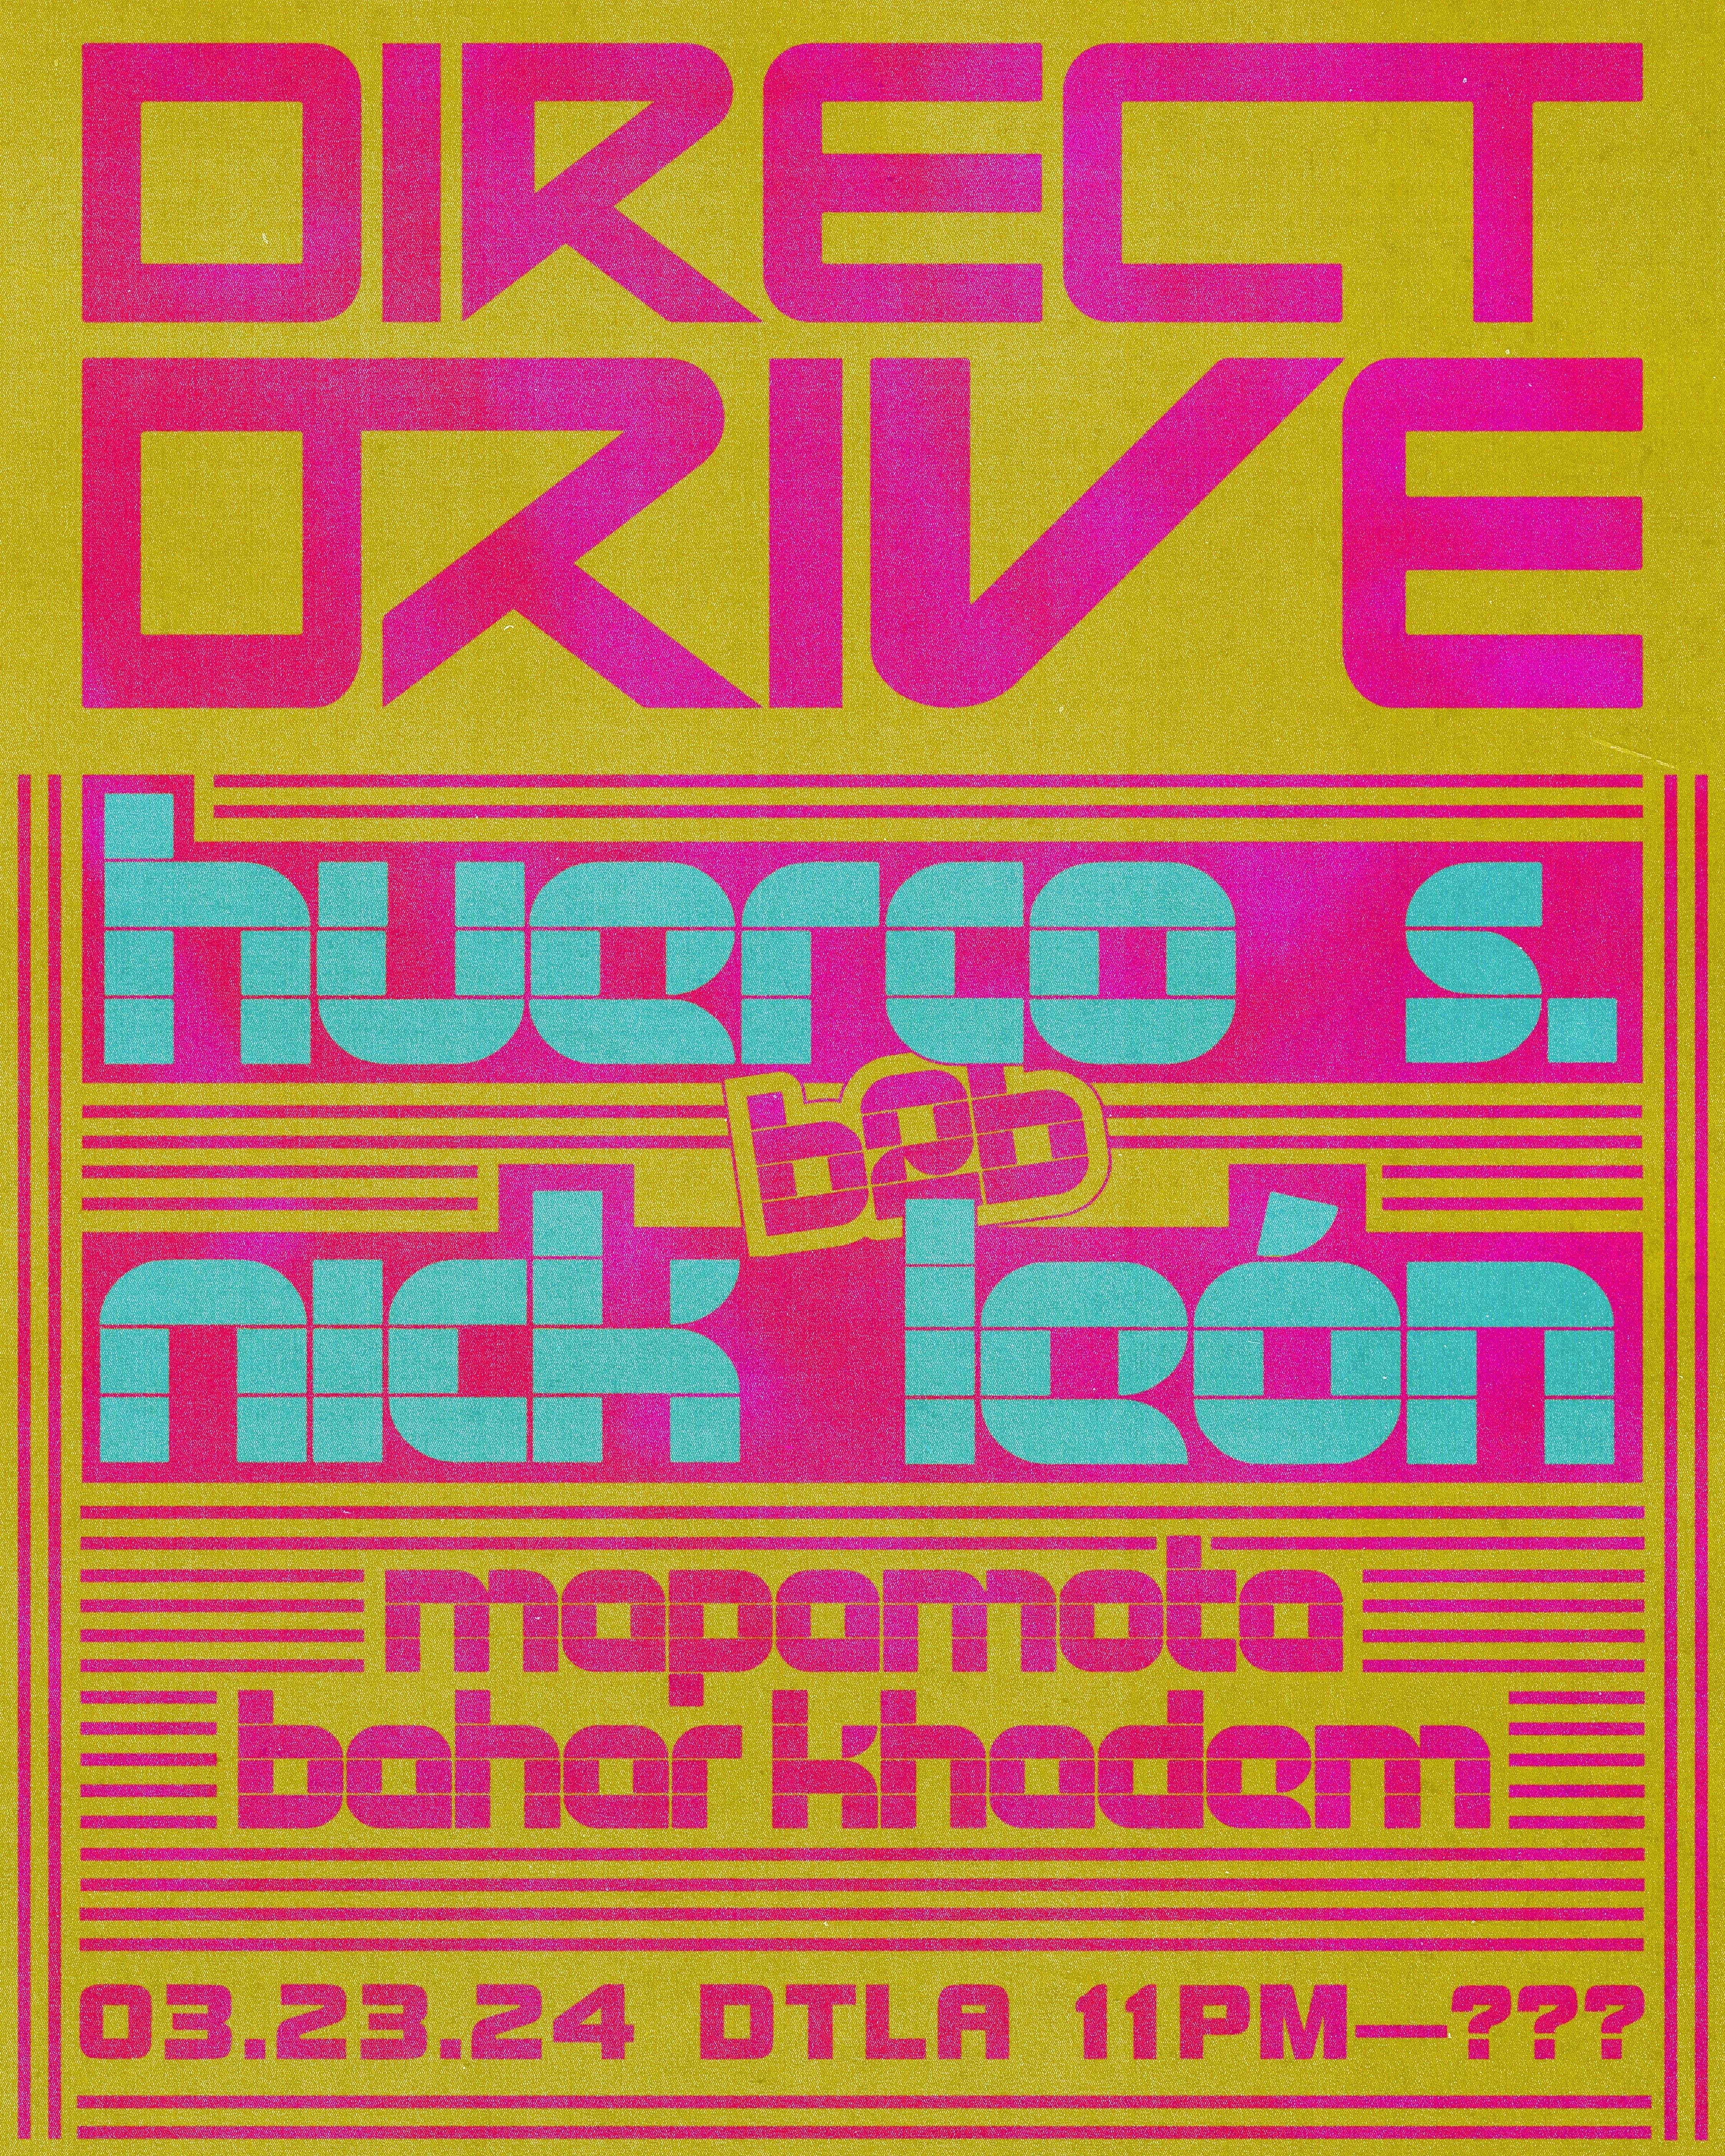 Direct Drive 1-Year Anniversary - Huerco S. b2b Nick León, Mapamota, bahar khadem - Página frontal